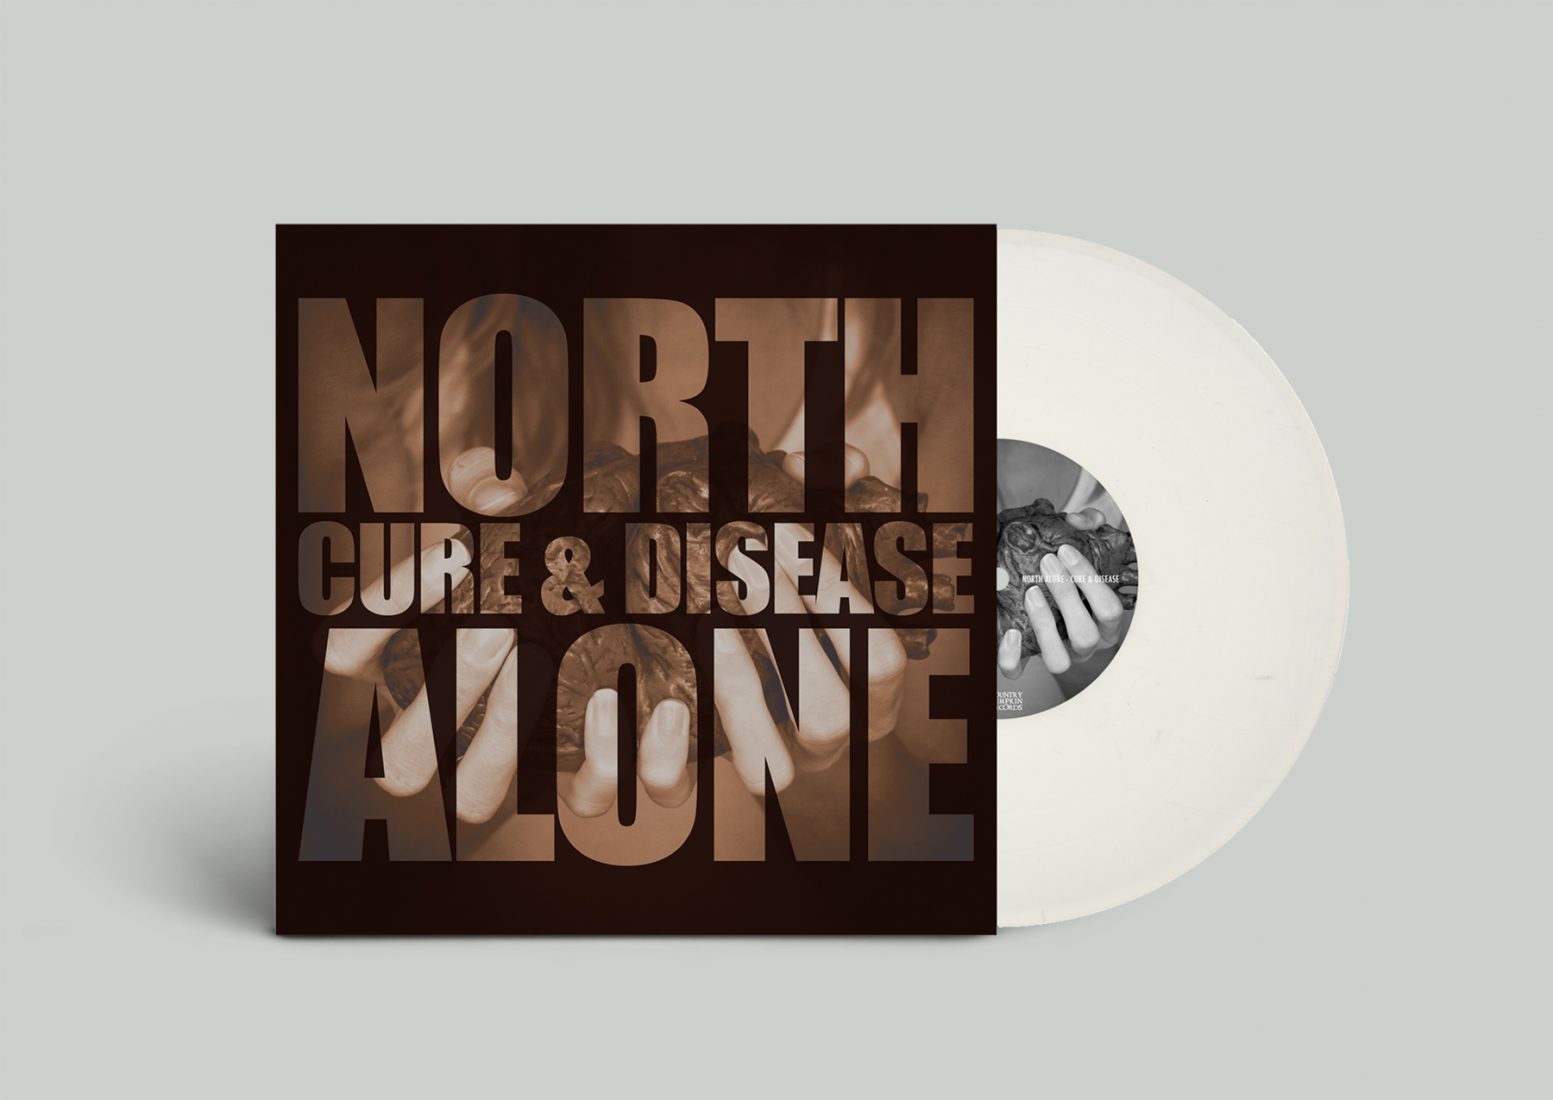 "Cure & Disease" White Vinyl